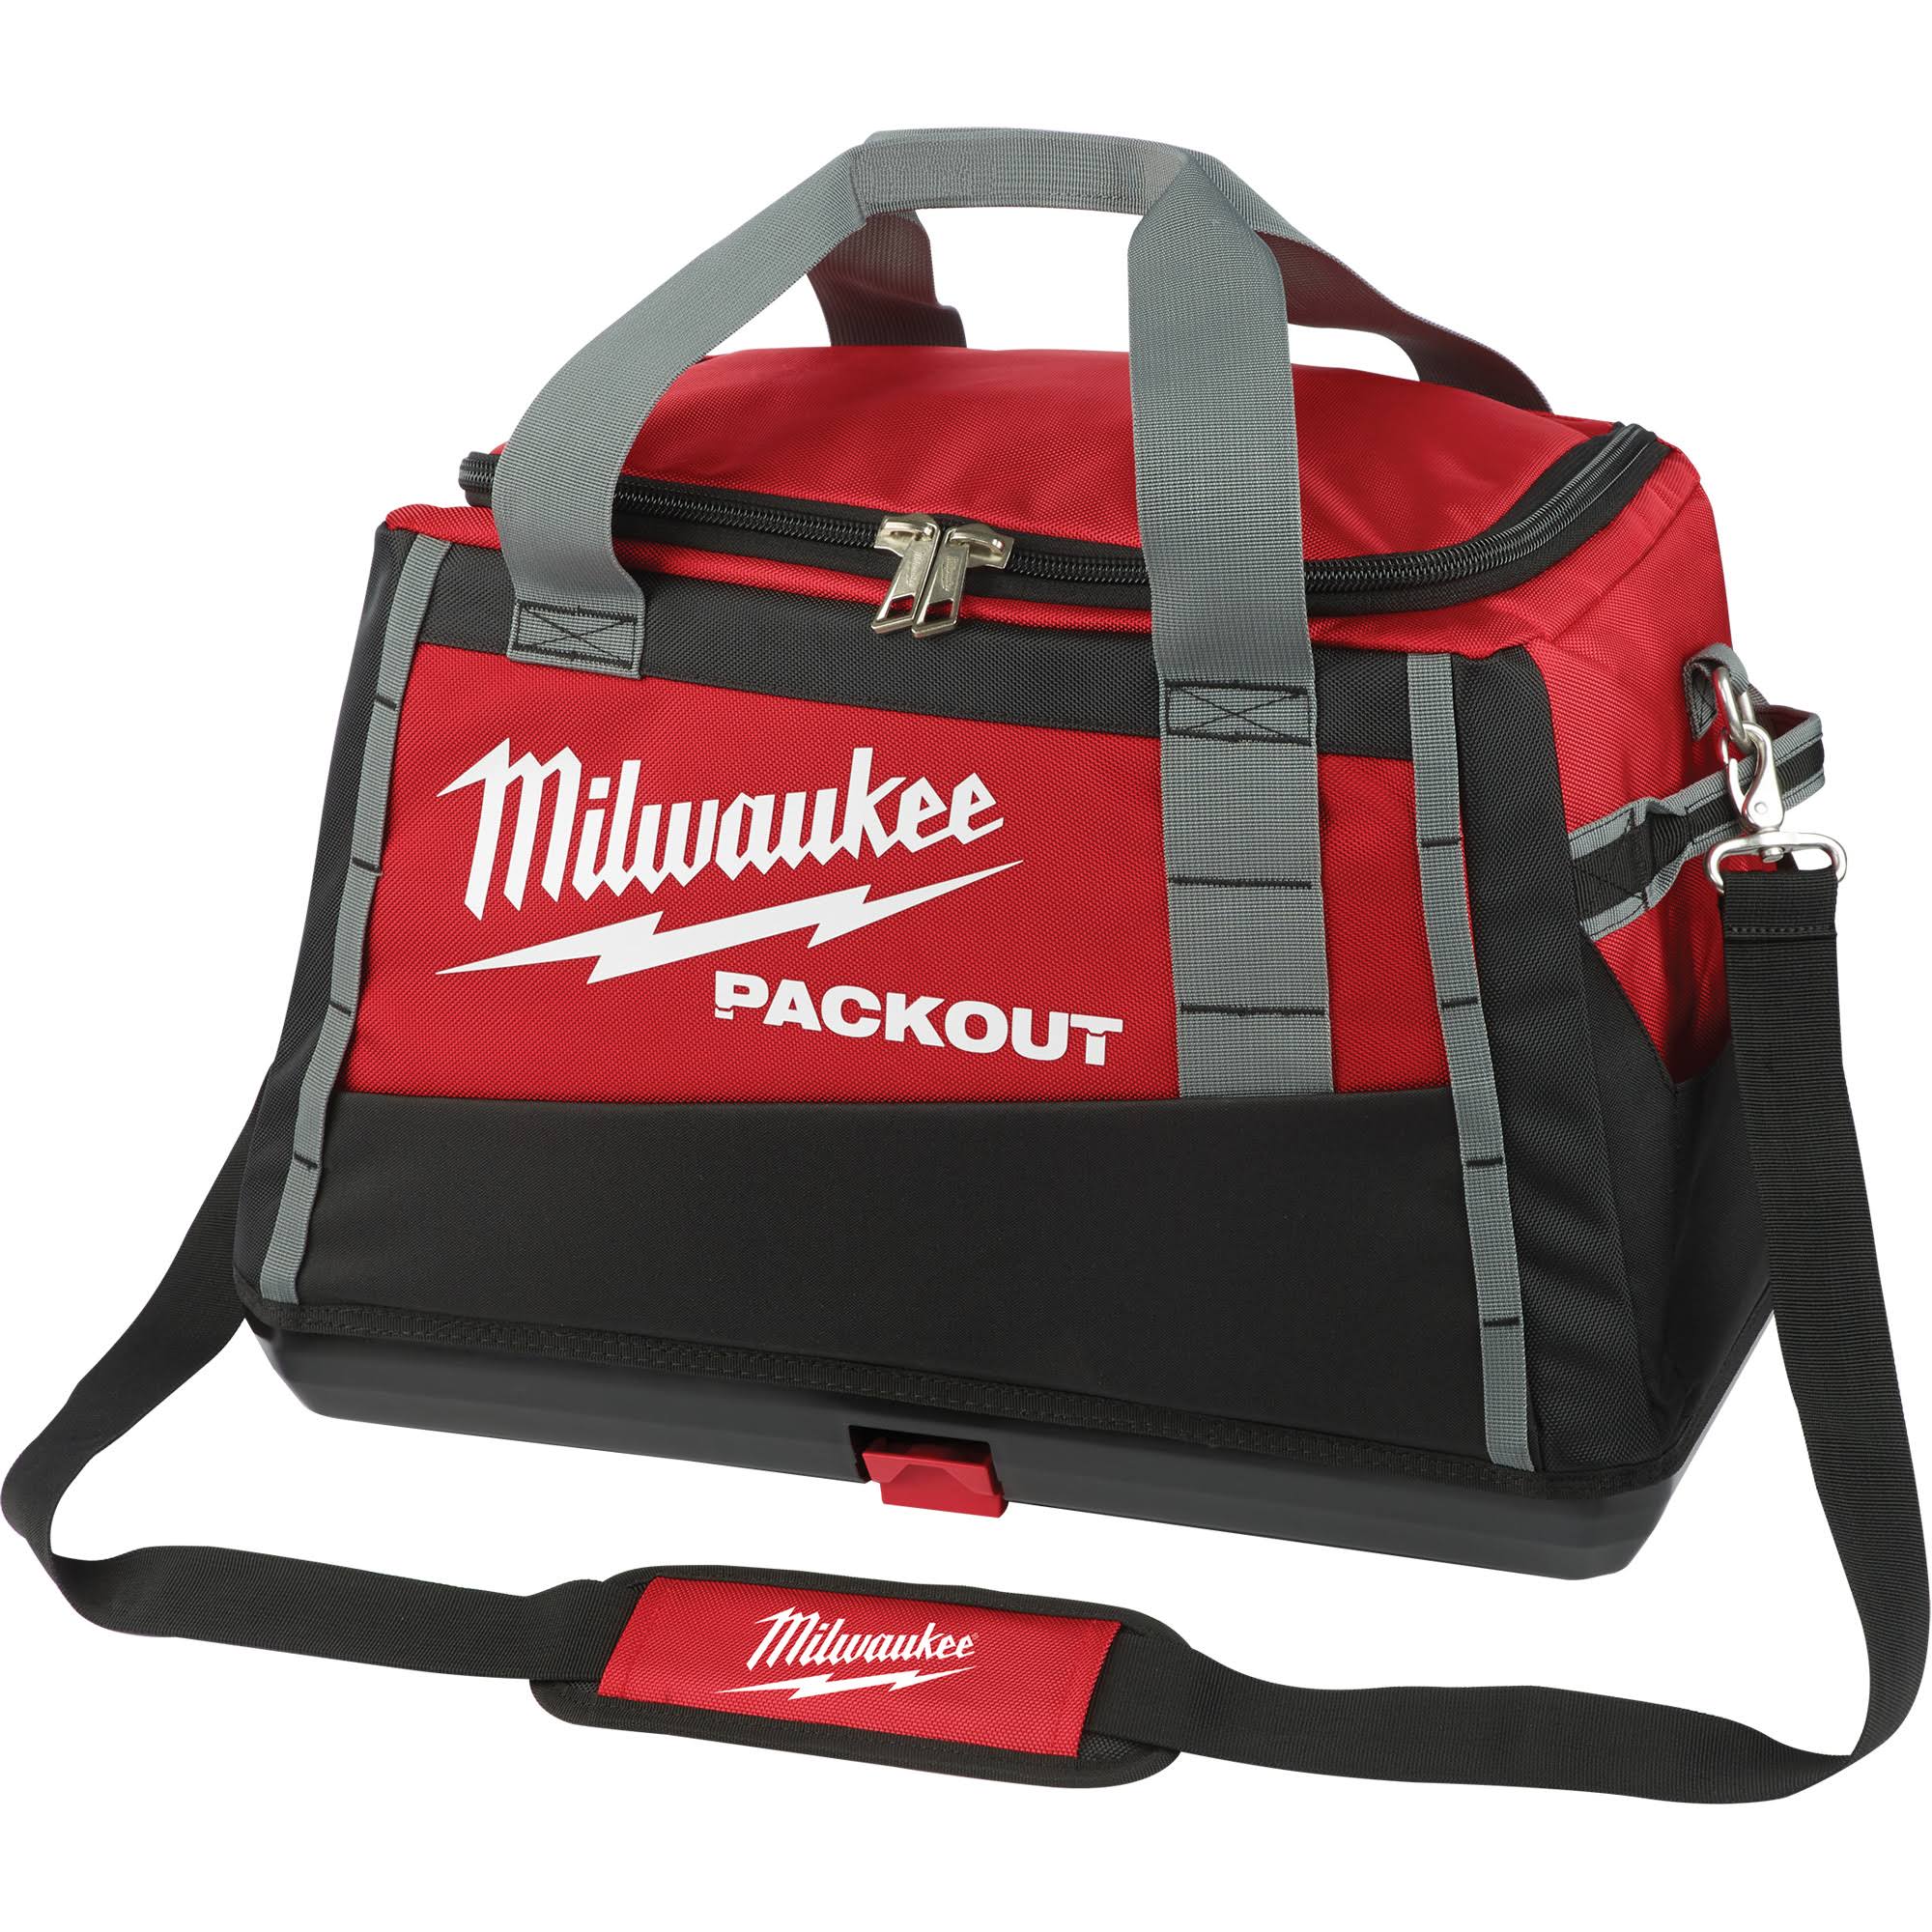 Milwaukee Packout Tool Bag - 20"